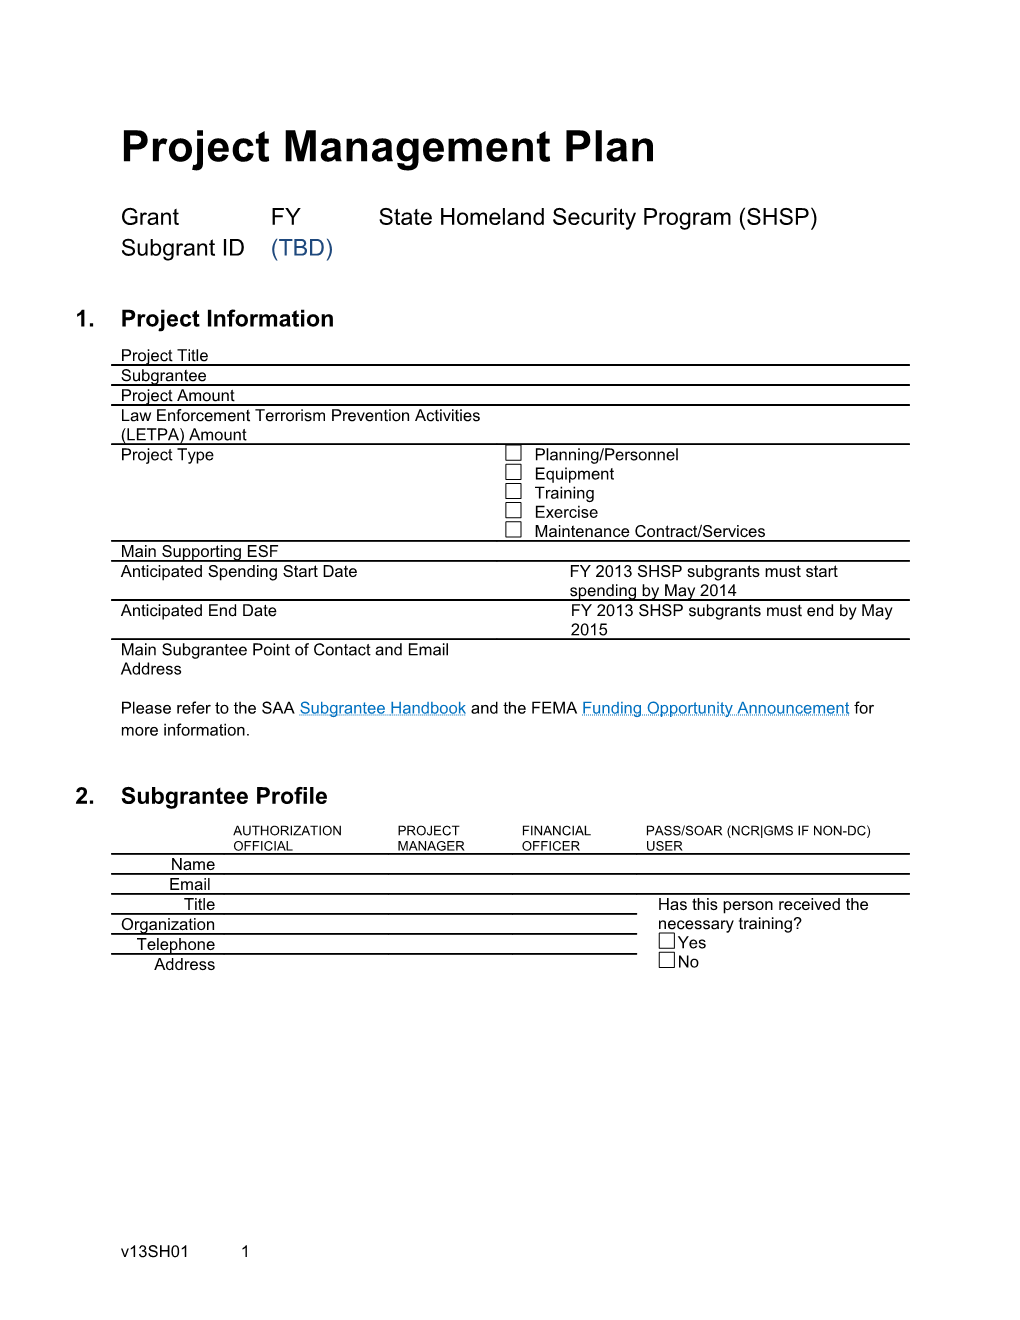 Project Management Plan SHSP